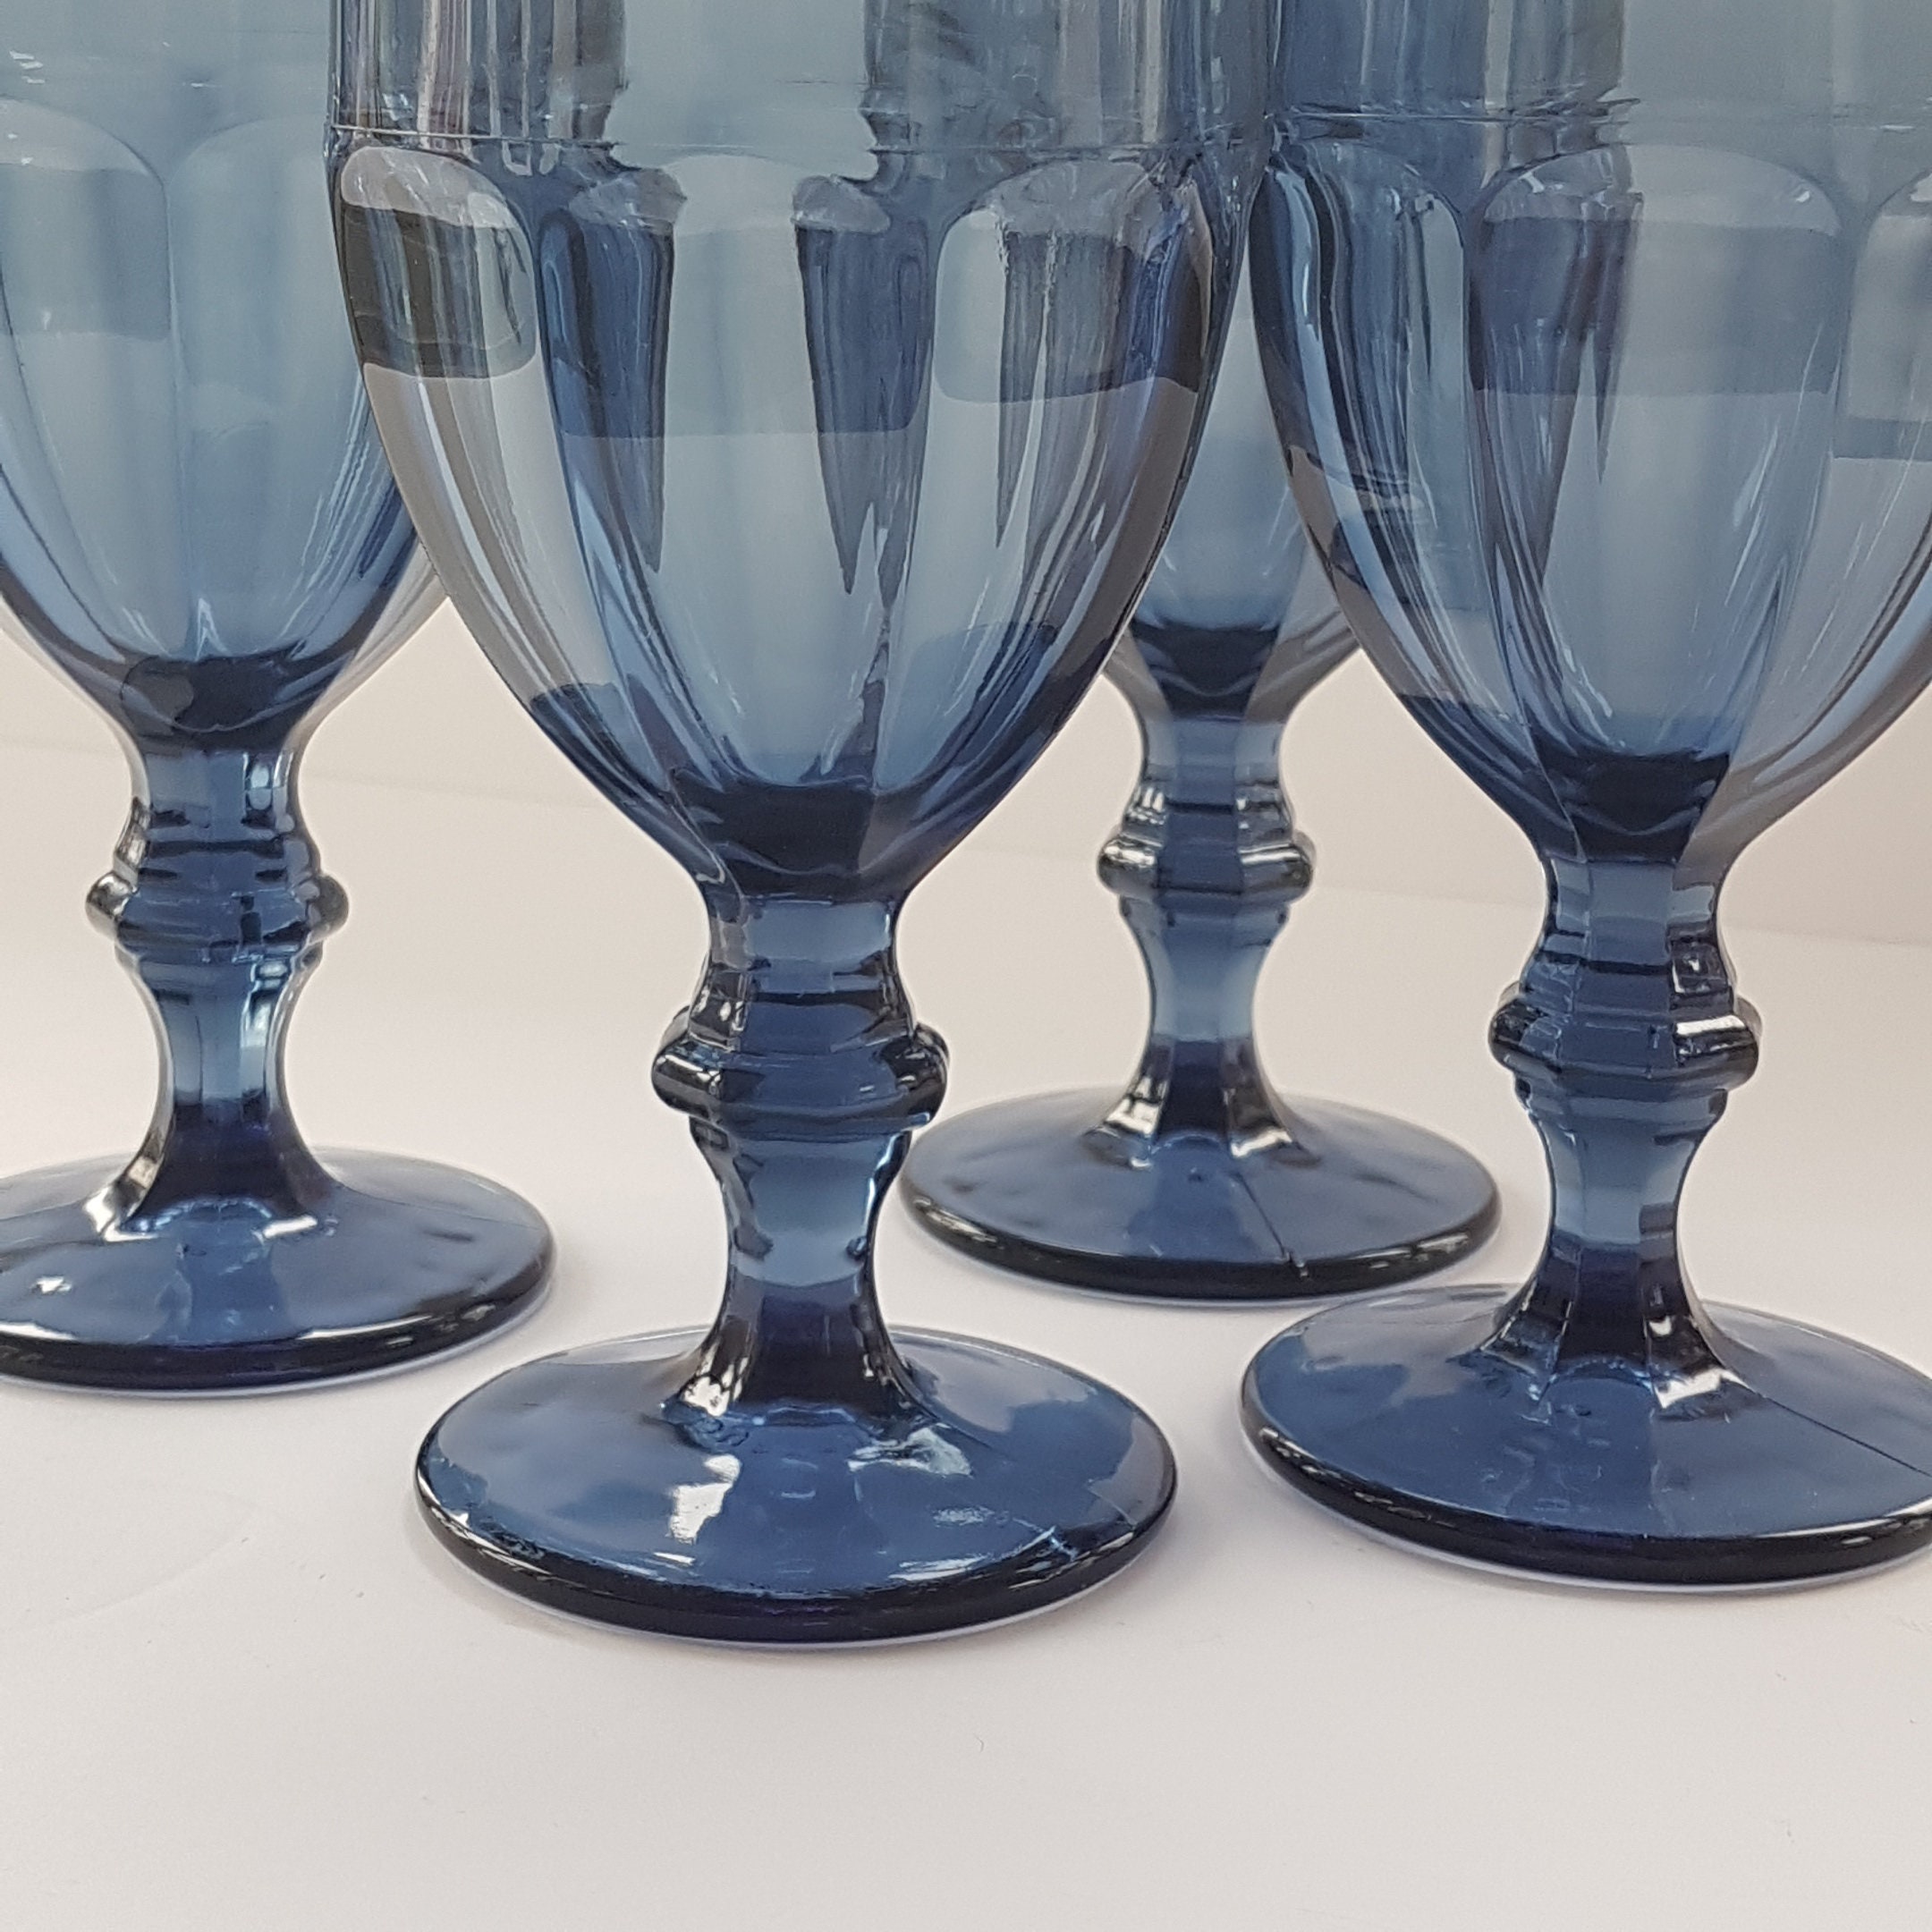 Vintage Libbey Champagne Glasses in Connoisseur Blue, Set of 4 - Ruby Lane